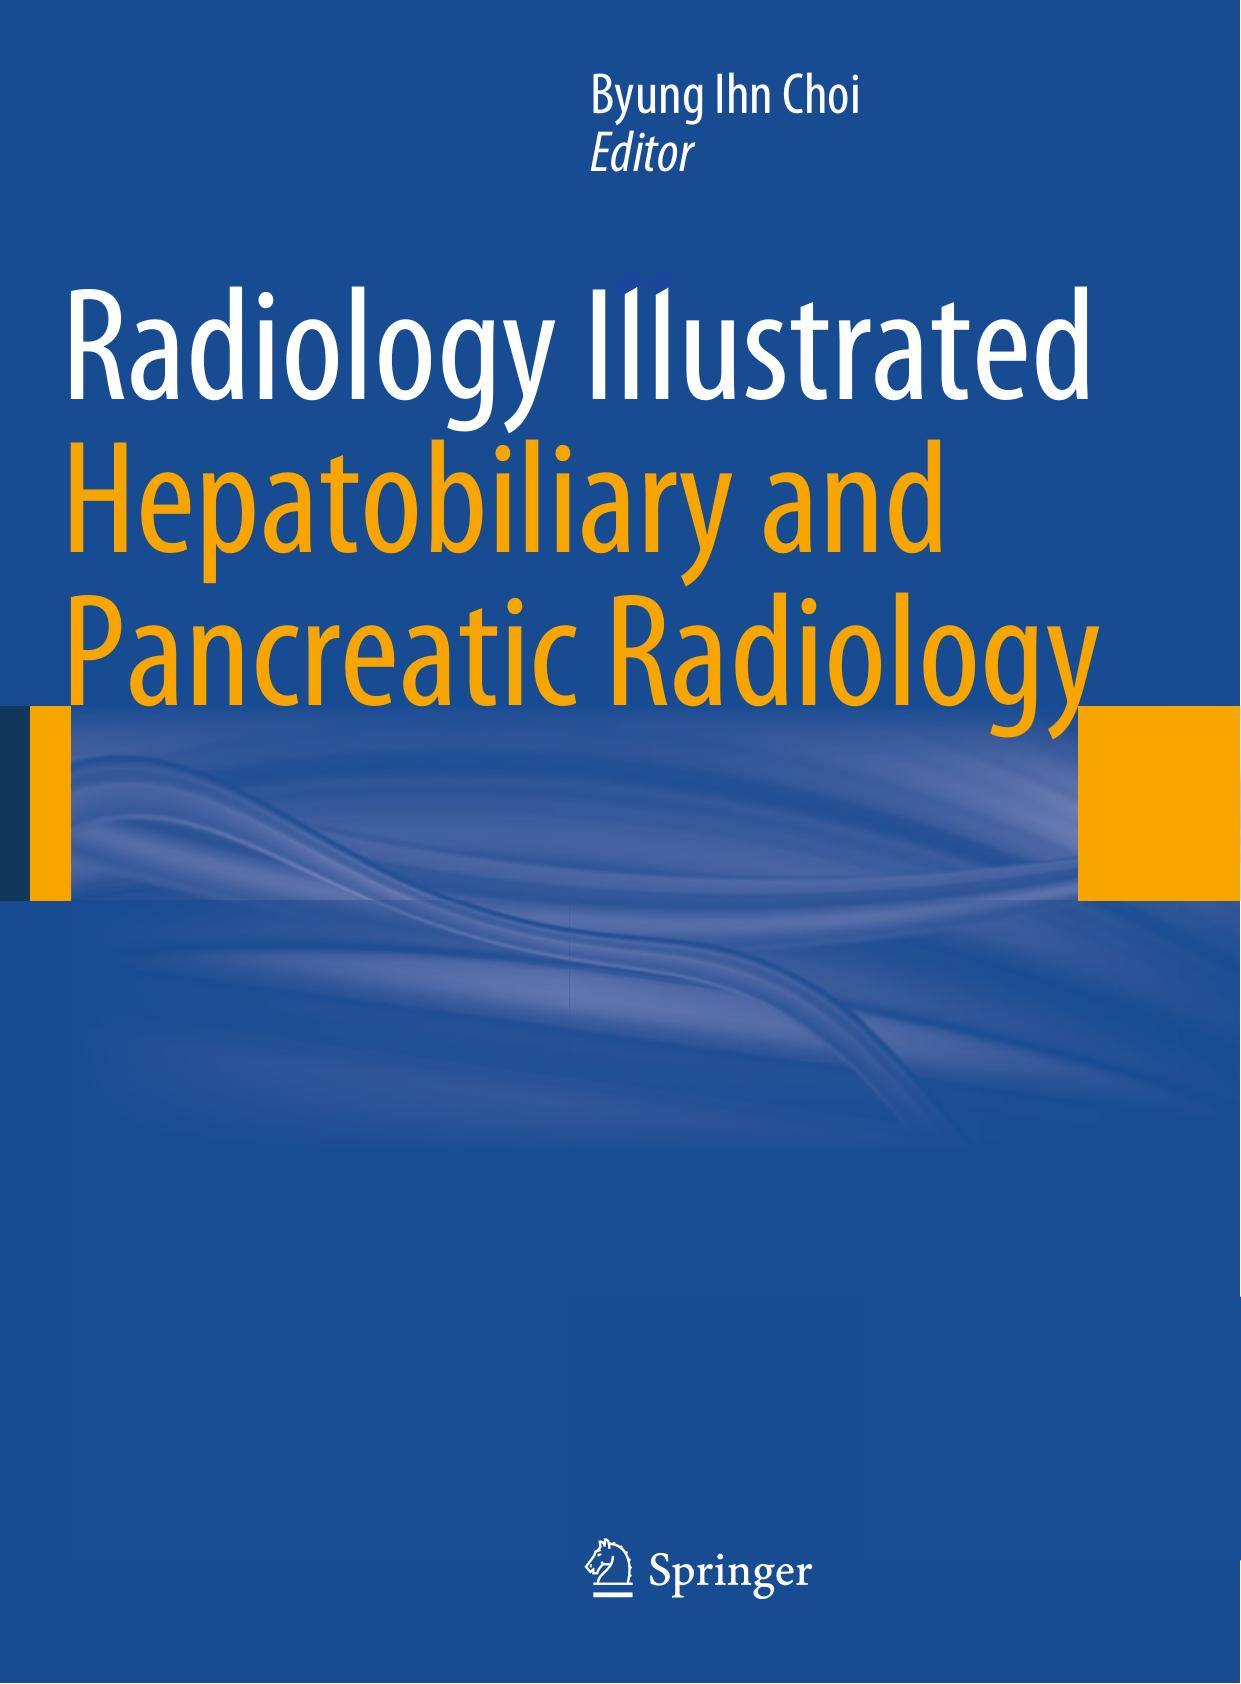 Radiology Illustrated  Hepatobiliary and Pancreatic Radiology ( PDFDrive.com )